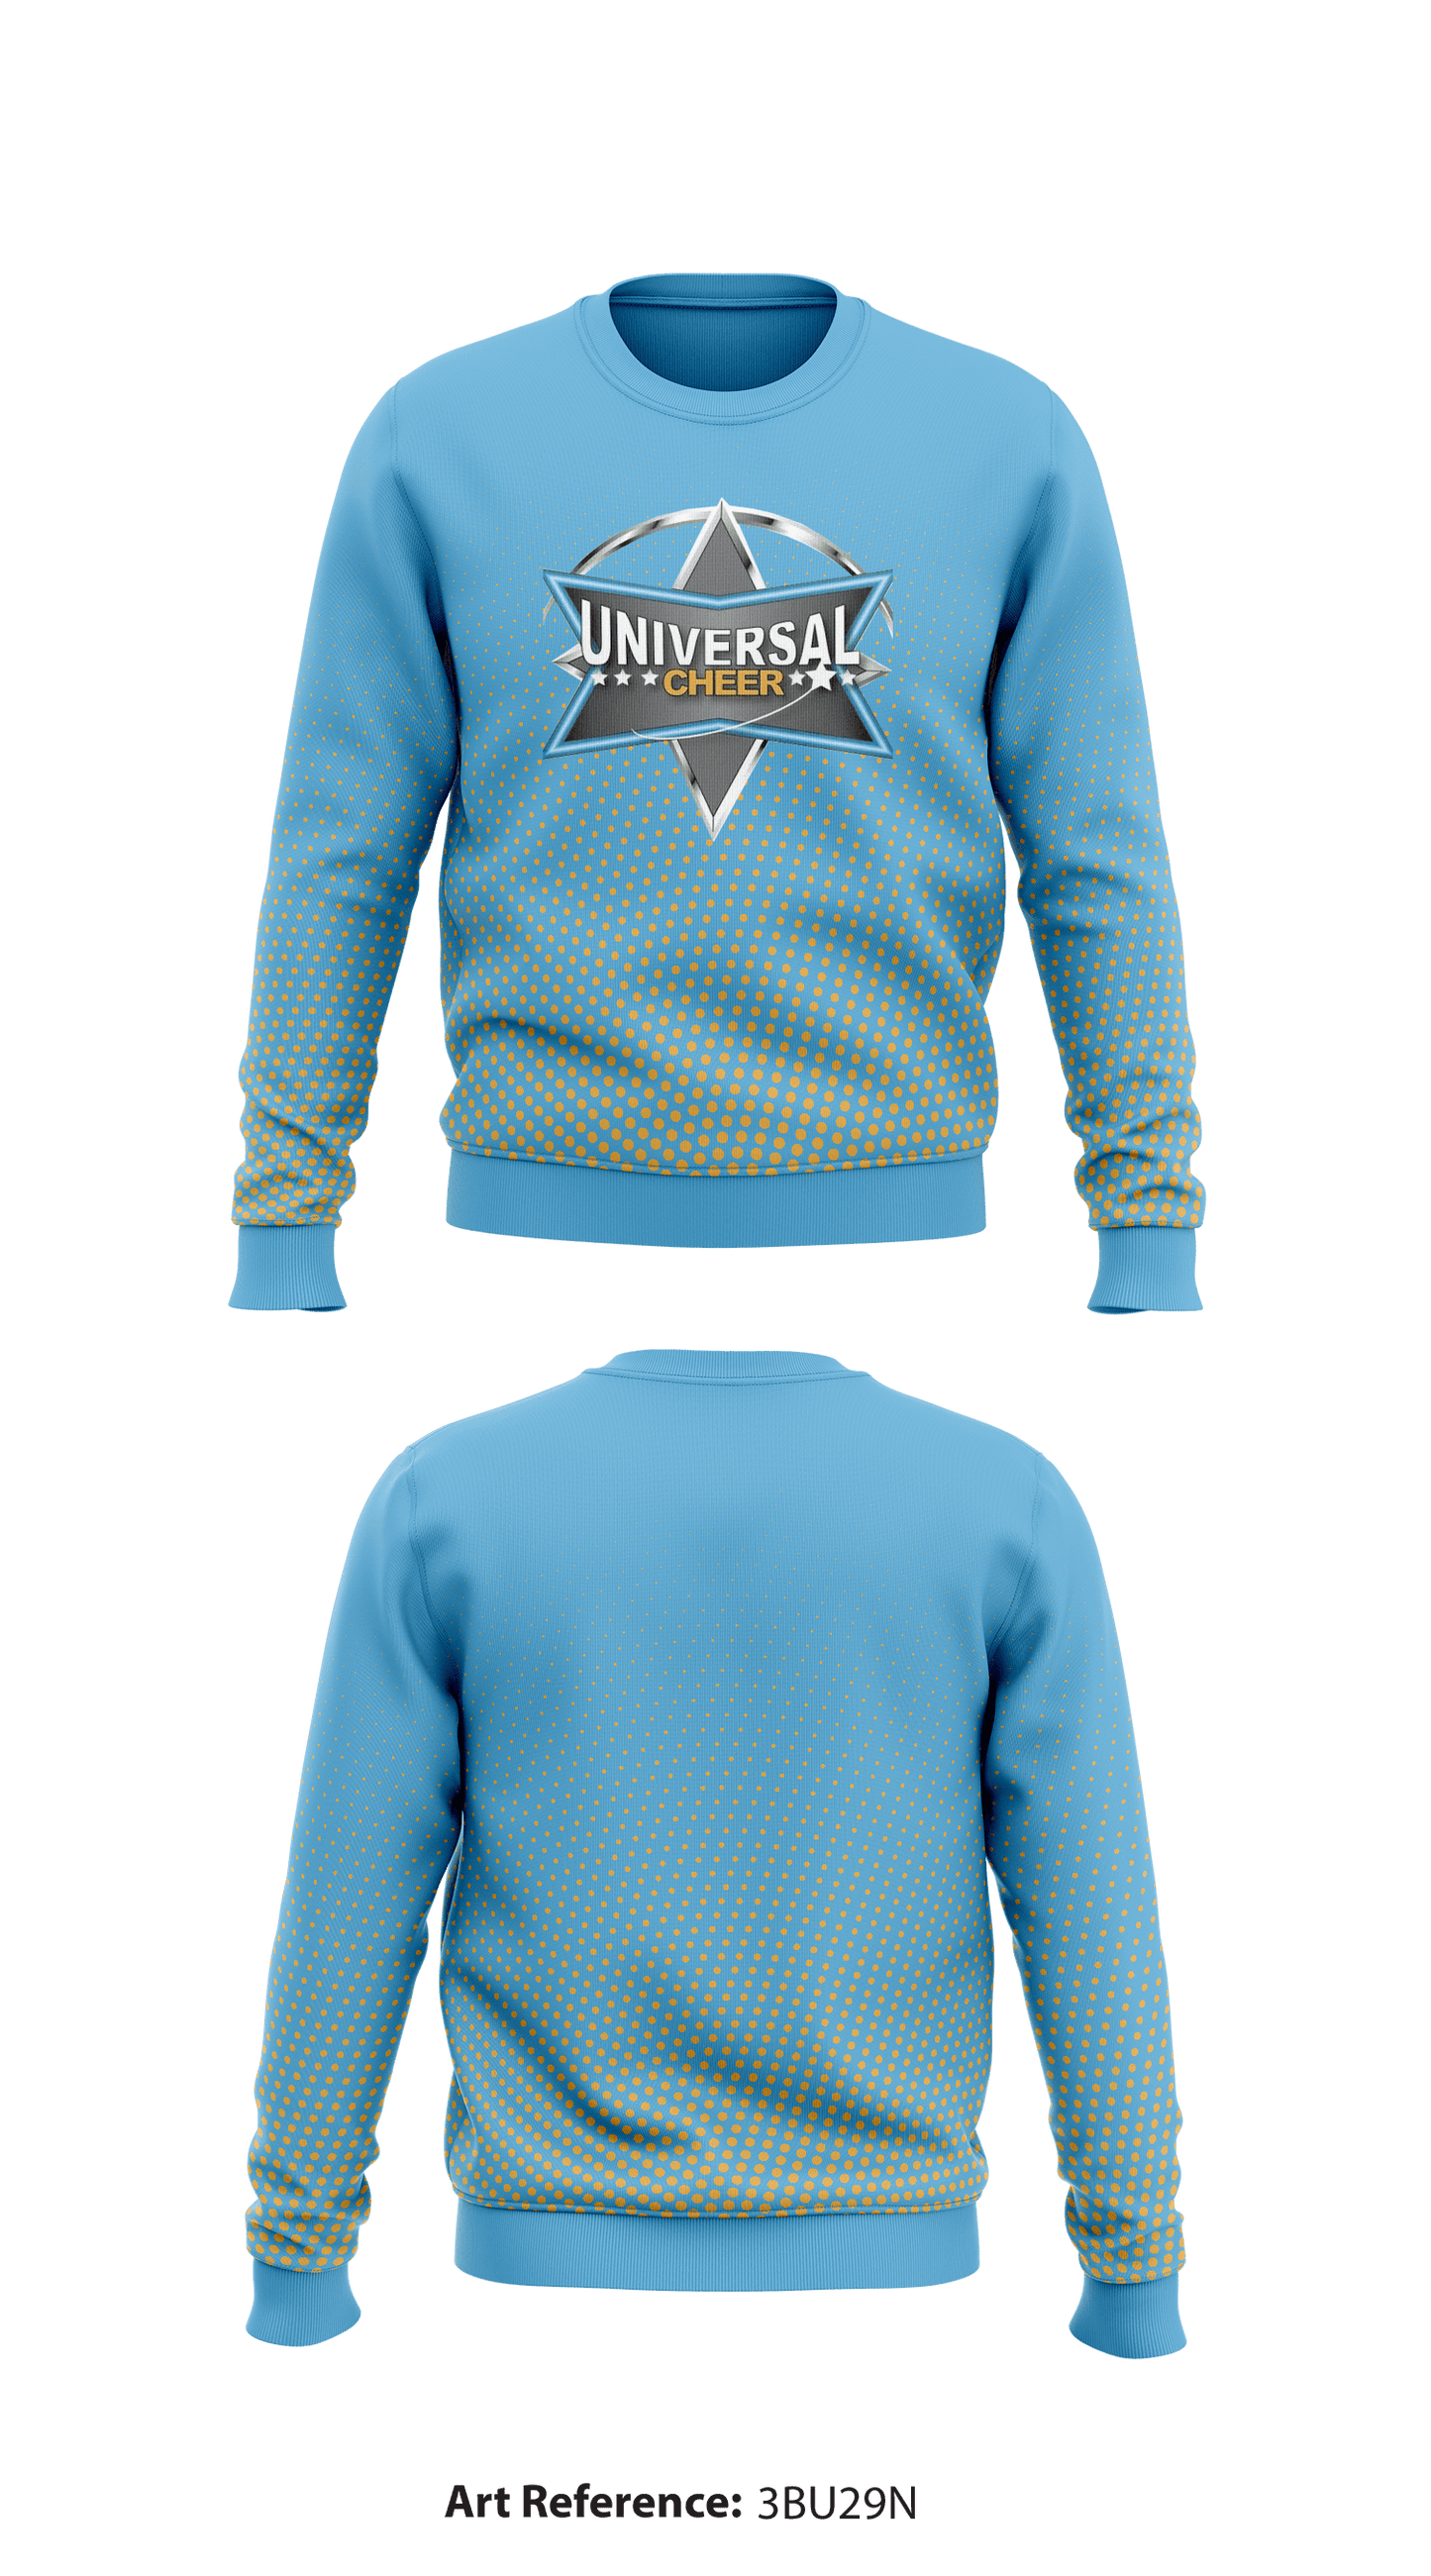 Universal Cheer Core Men's Crewneck Performance Sweatshirt - 3Bu29n